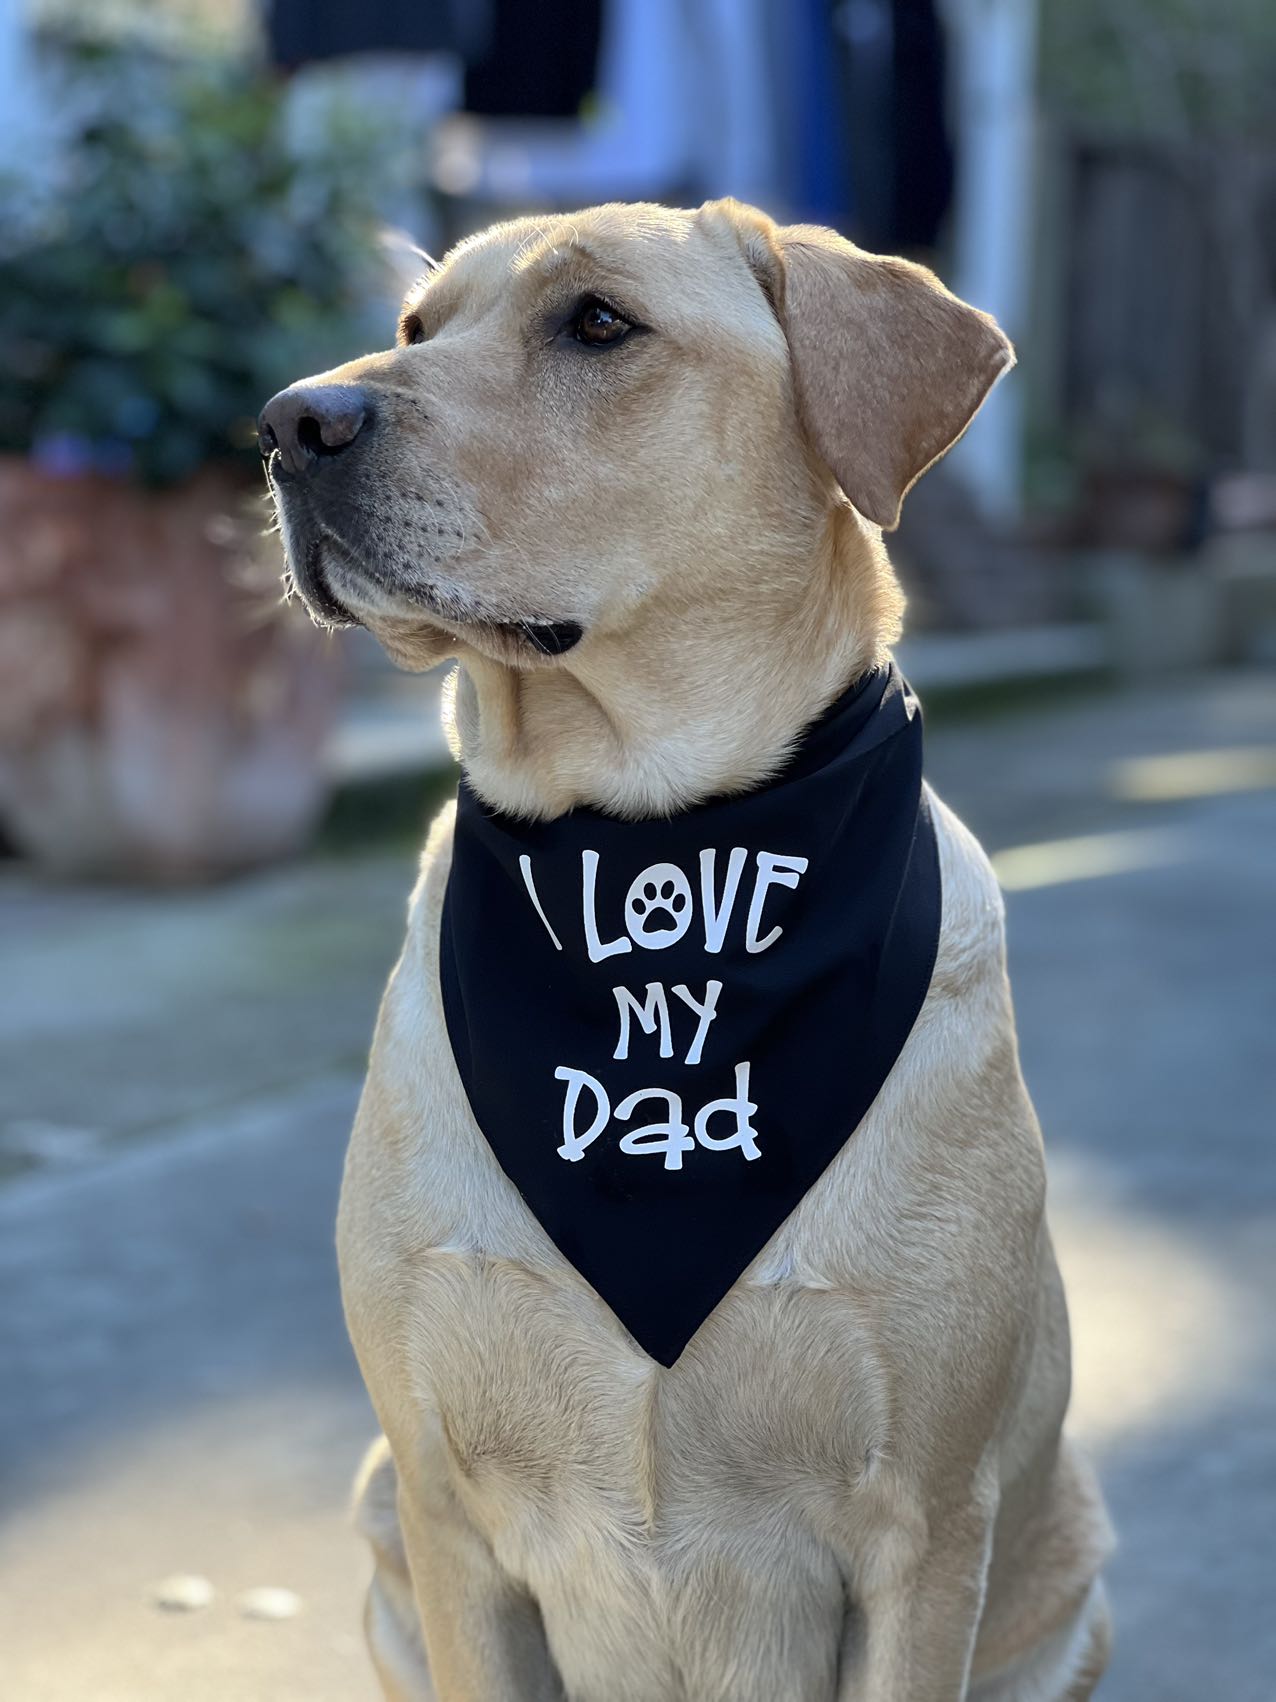 Proud Dog Dad Beanie and "I Love My Dad" Bandana Set